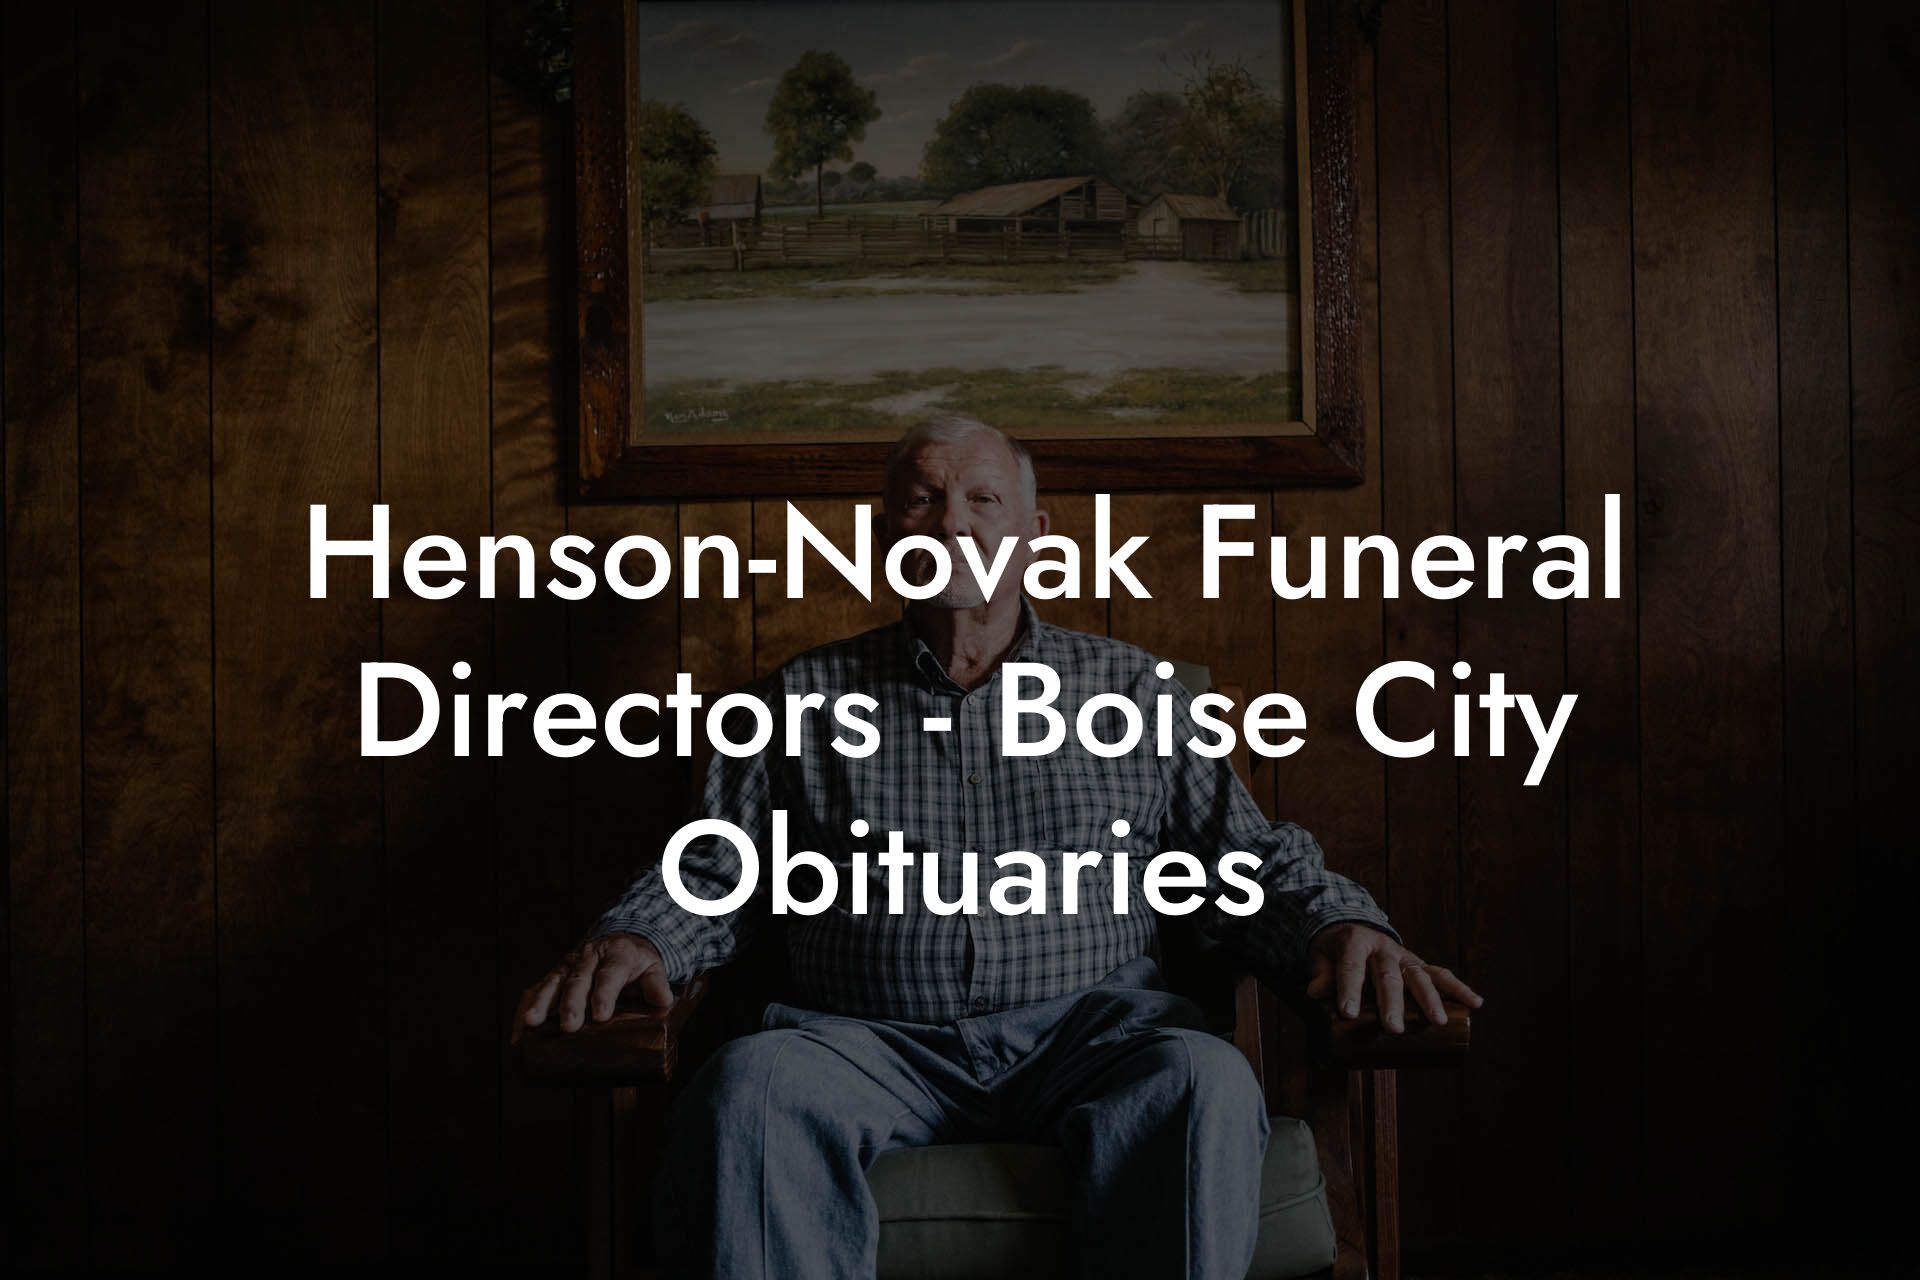 Henson-Novak Funeral Directors - Boise City Obituaries